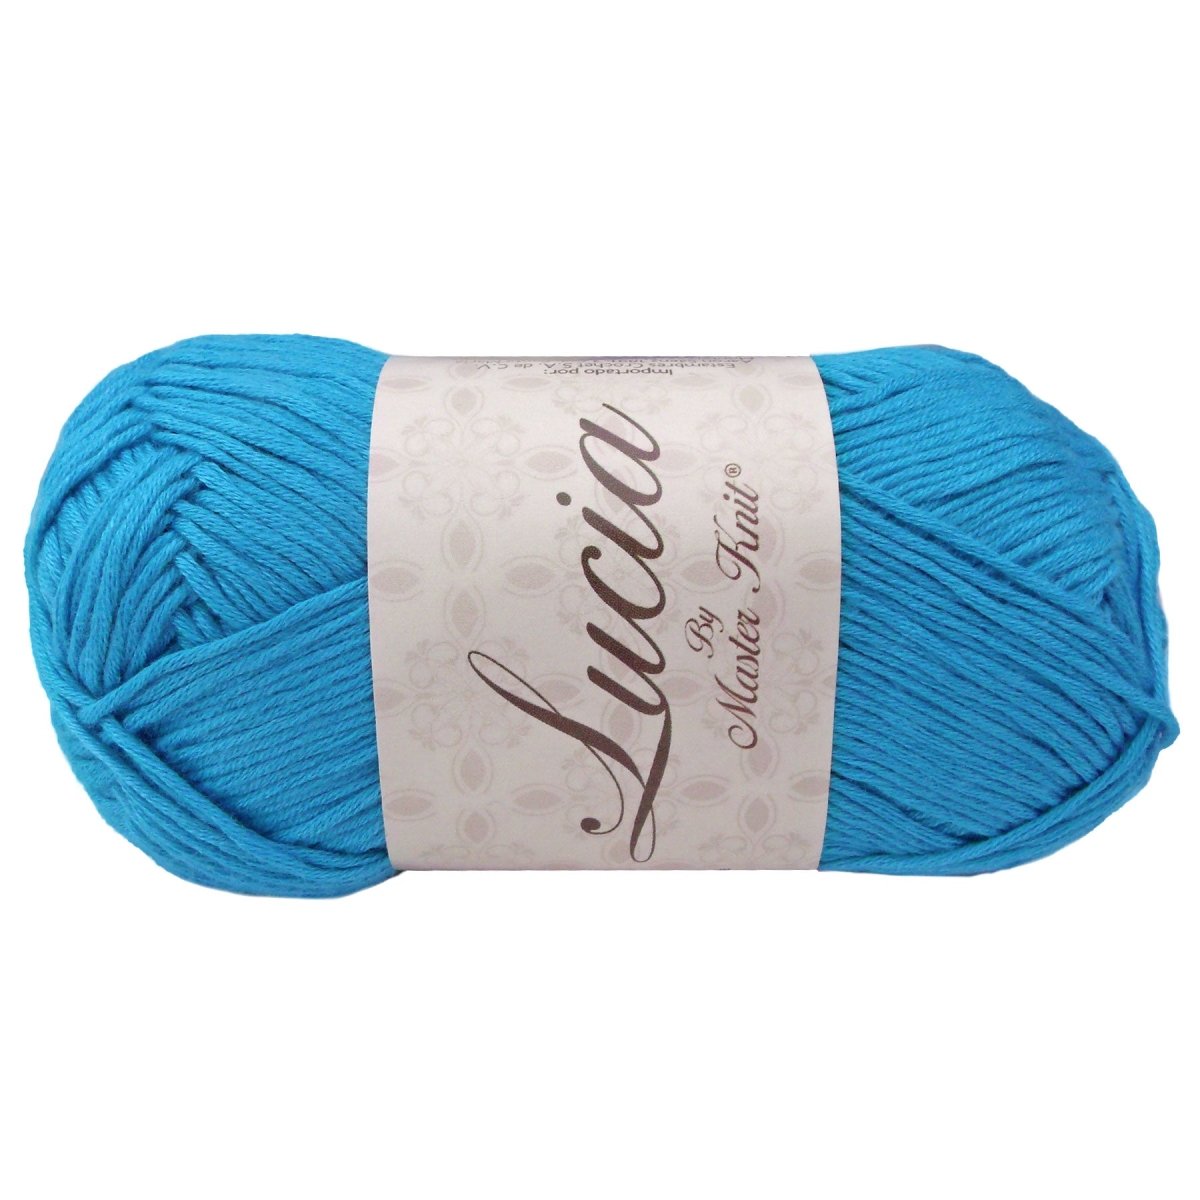 LUCIA - Crochetstores9627-235